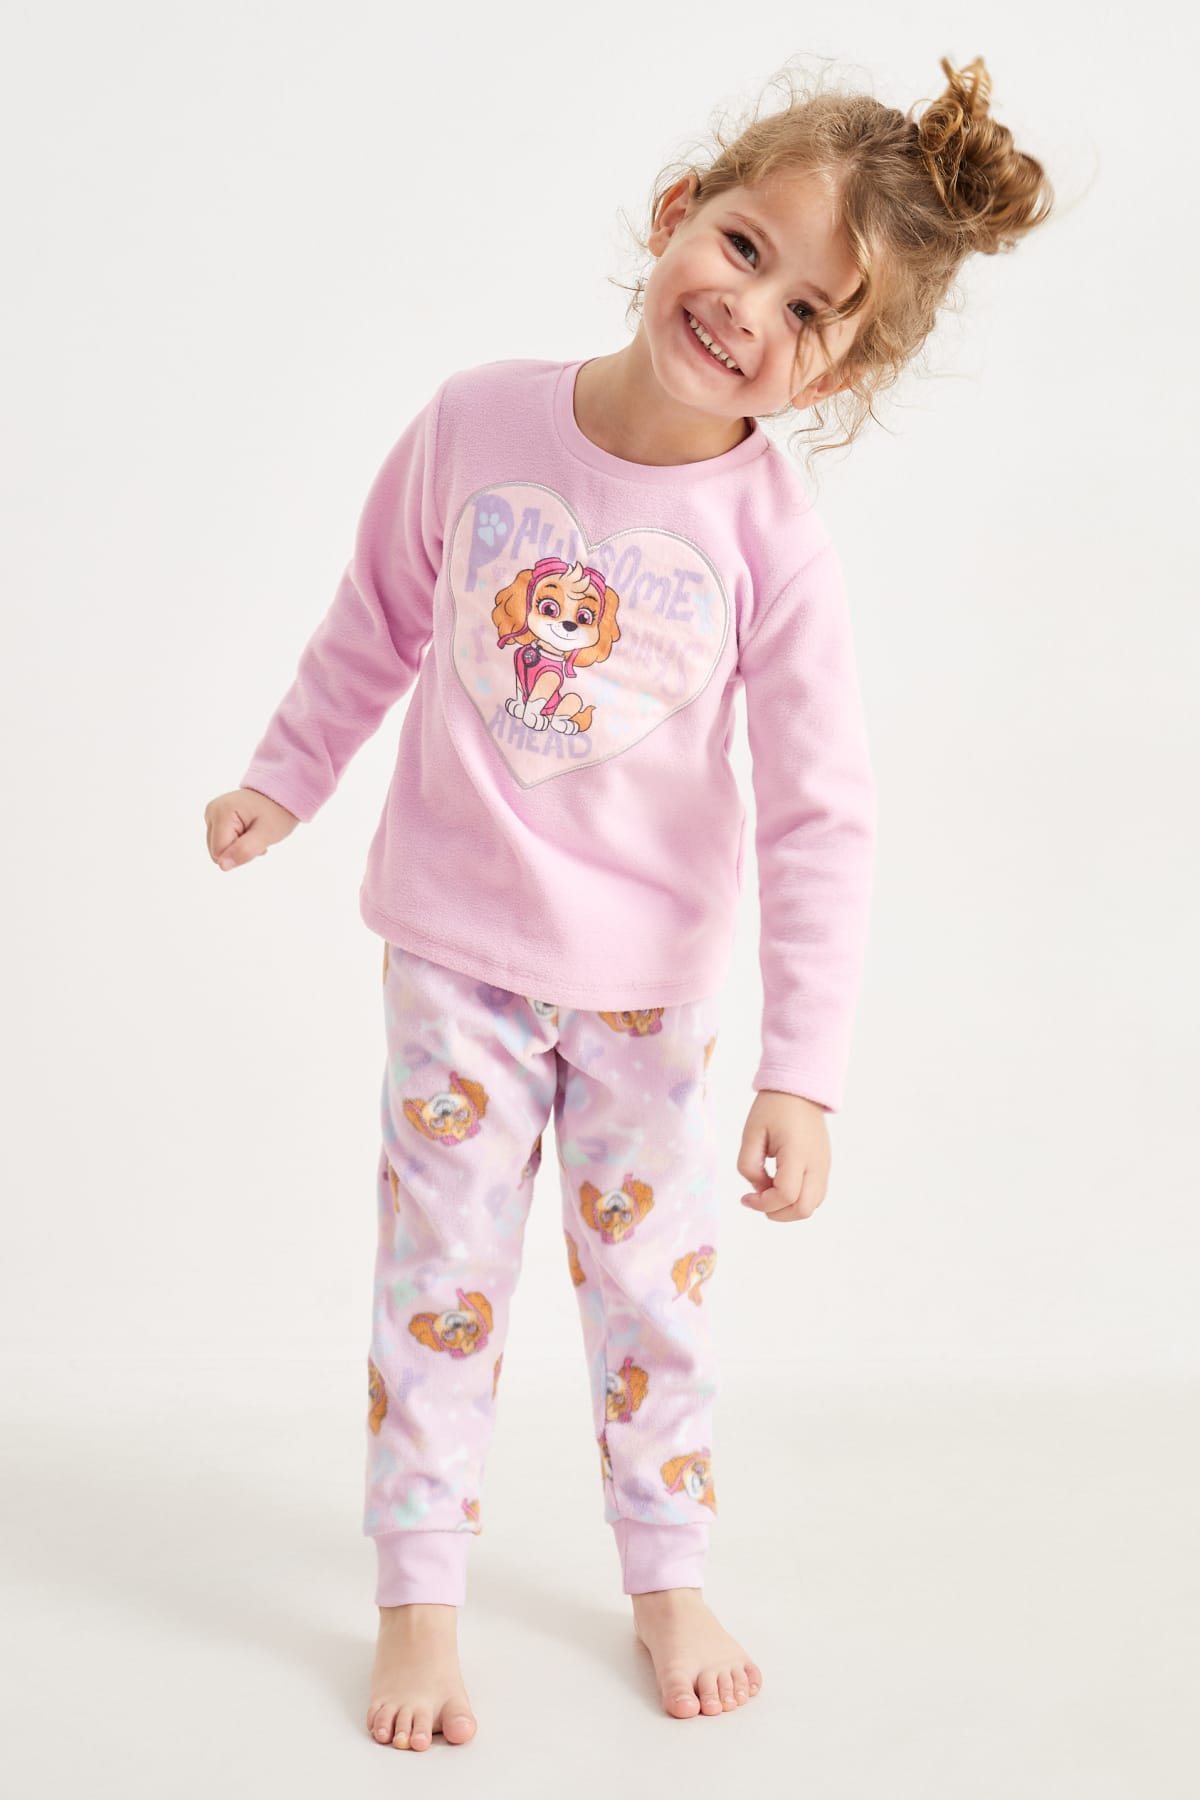 Pijamas de niña de C&A, comodidad máxima.